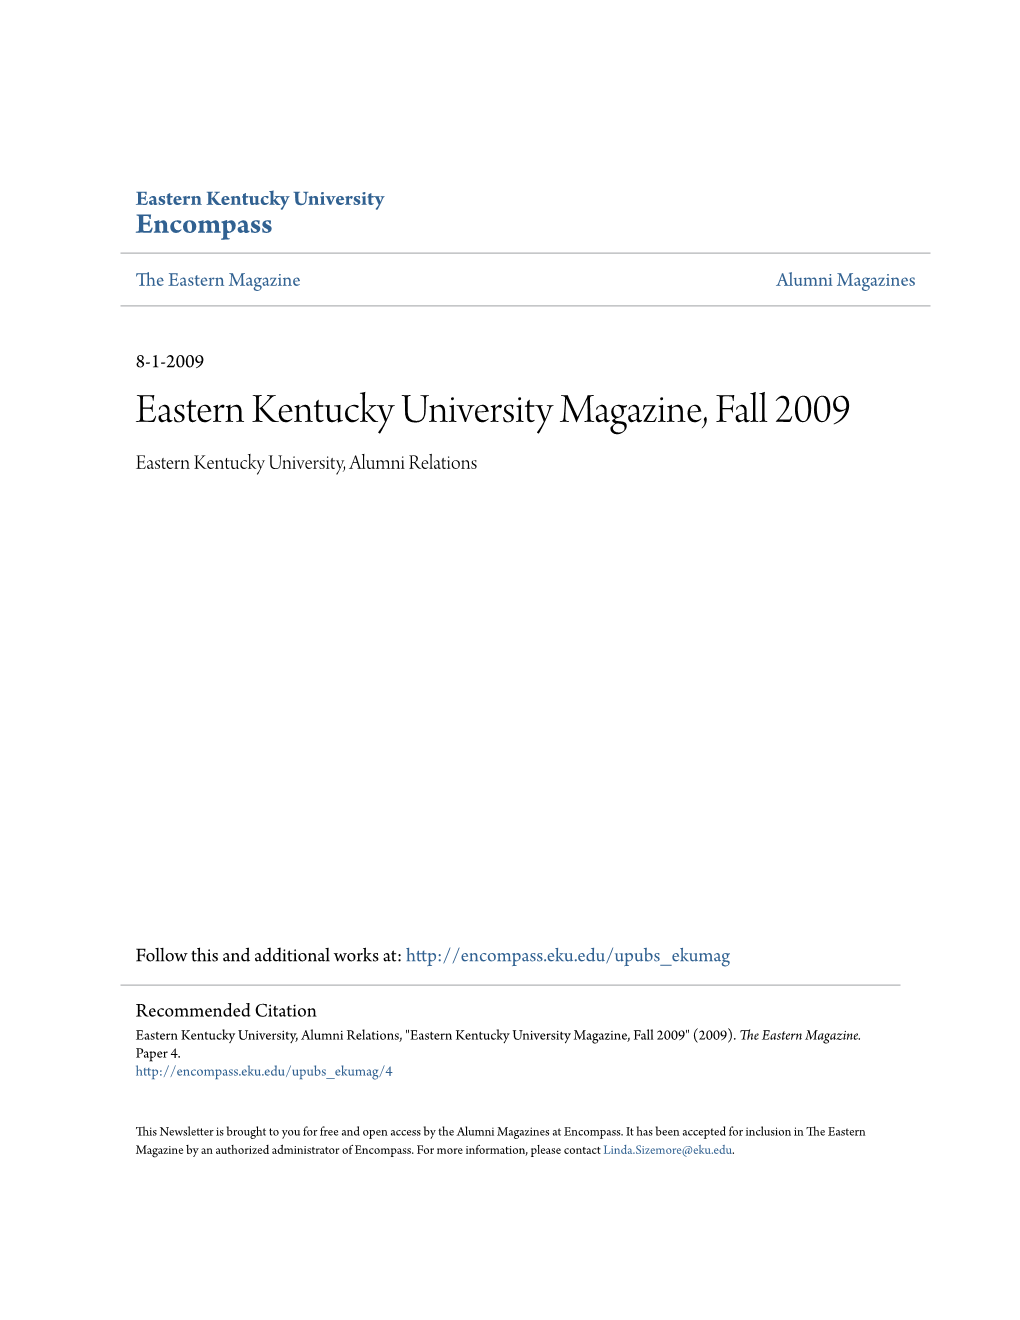 Eastern Kentucky University Magazine, Fall 2009 Eastern Kentucky University, Alumni Relations